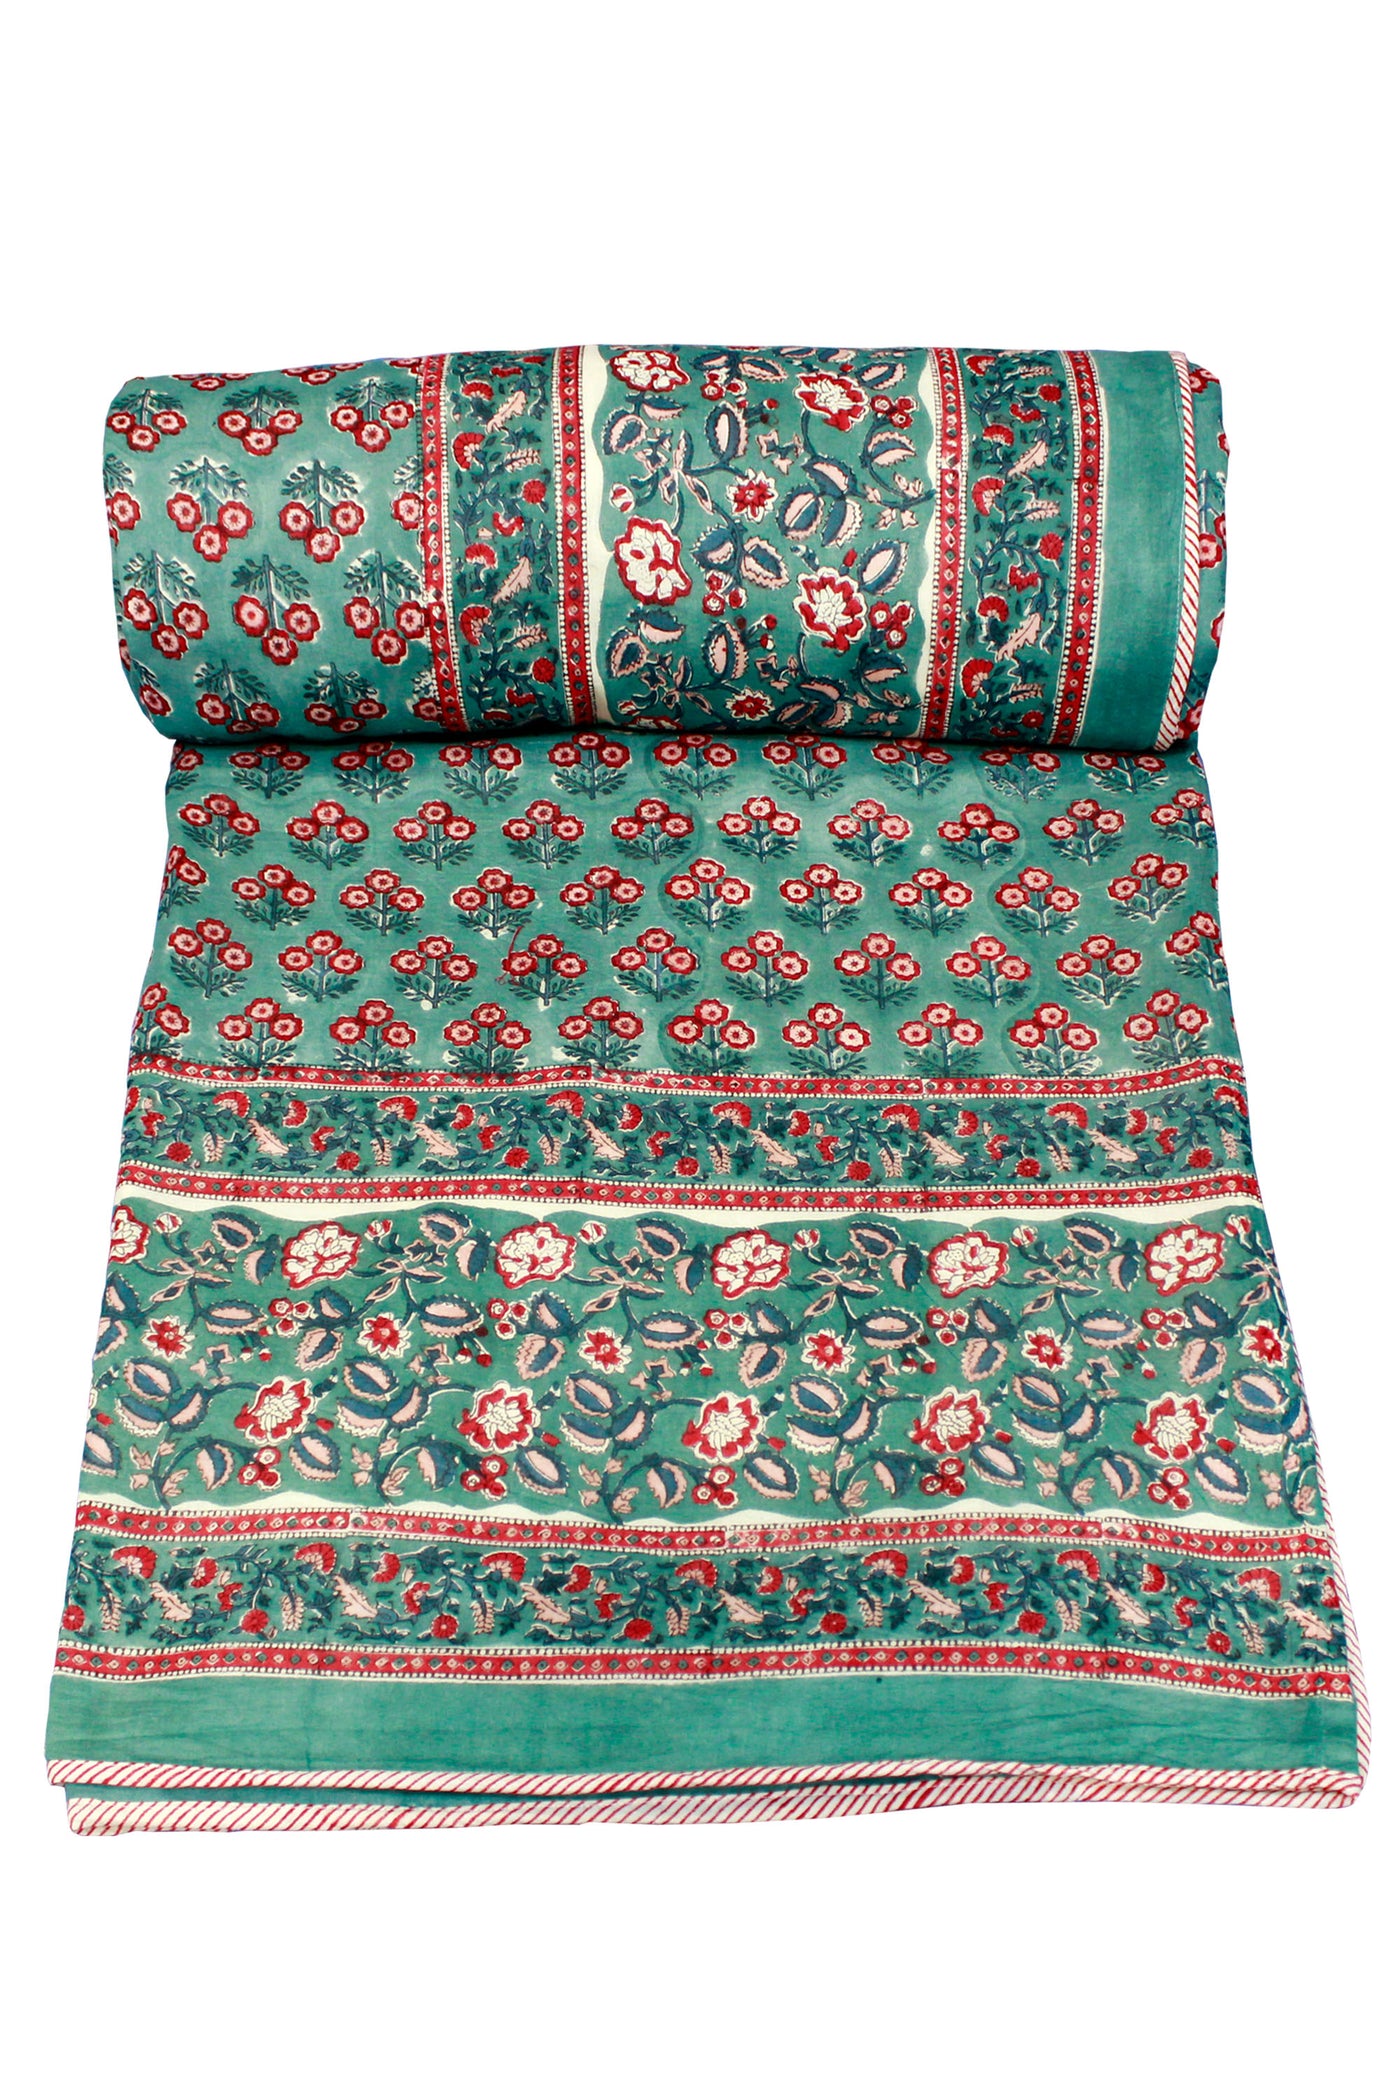 Cotton Buti Hand Block Print Dohar in Turquoise